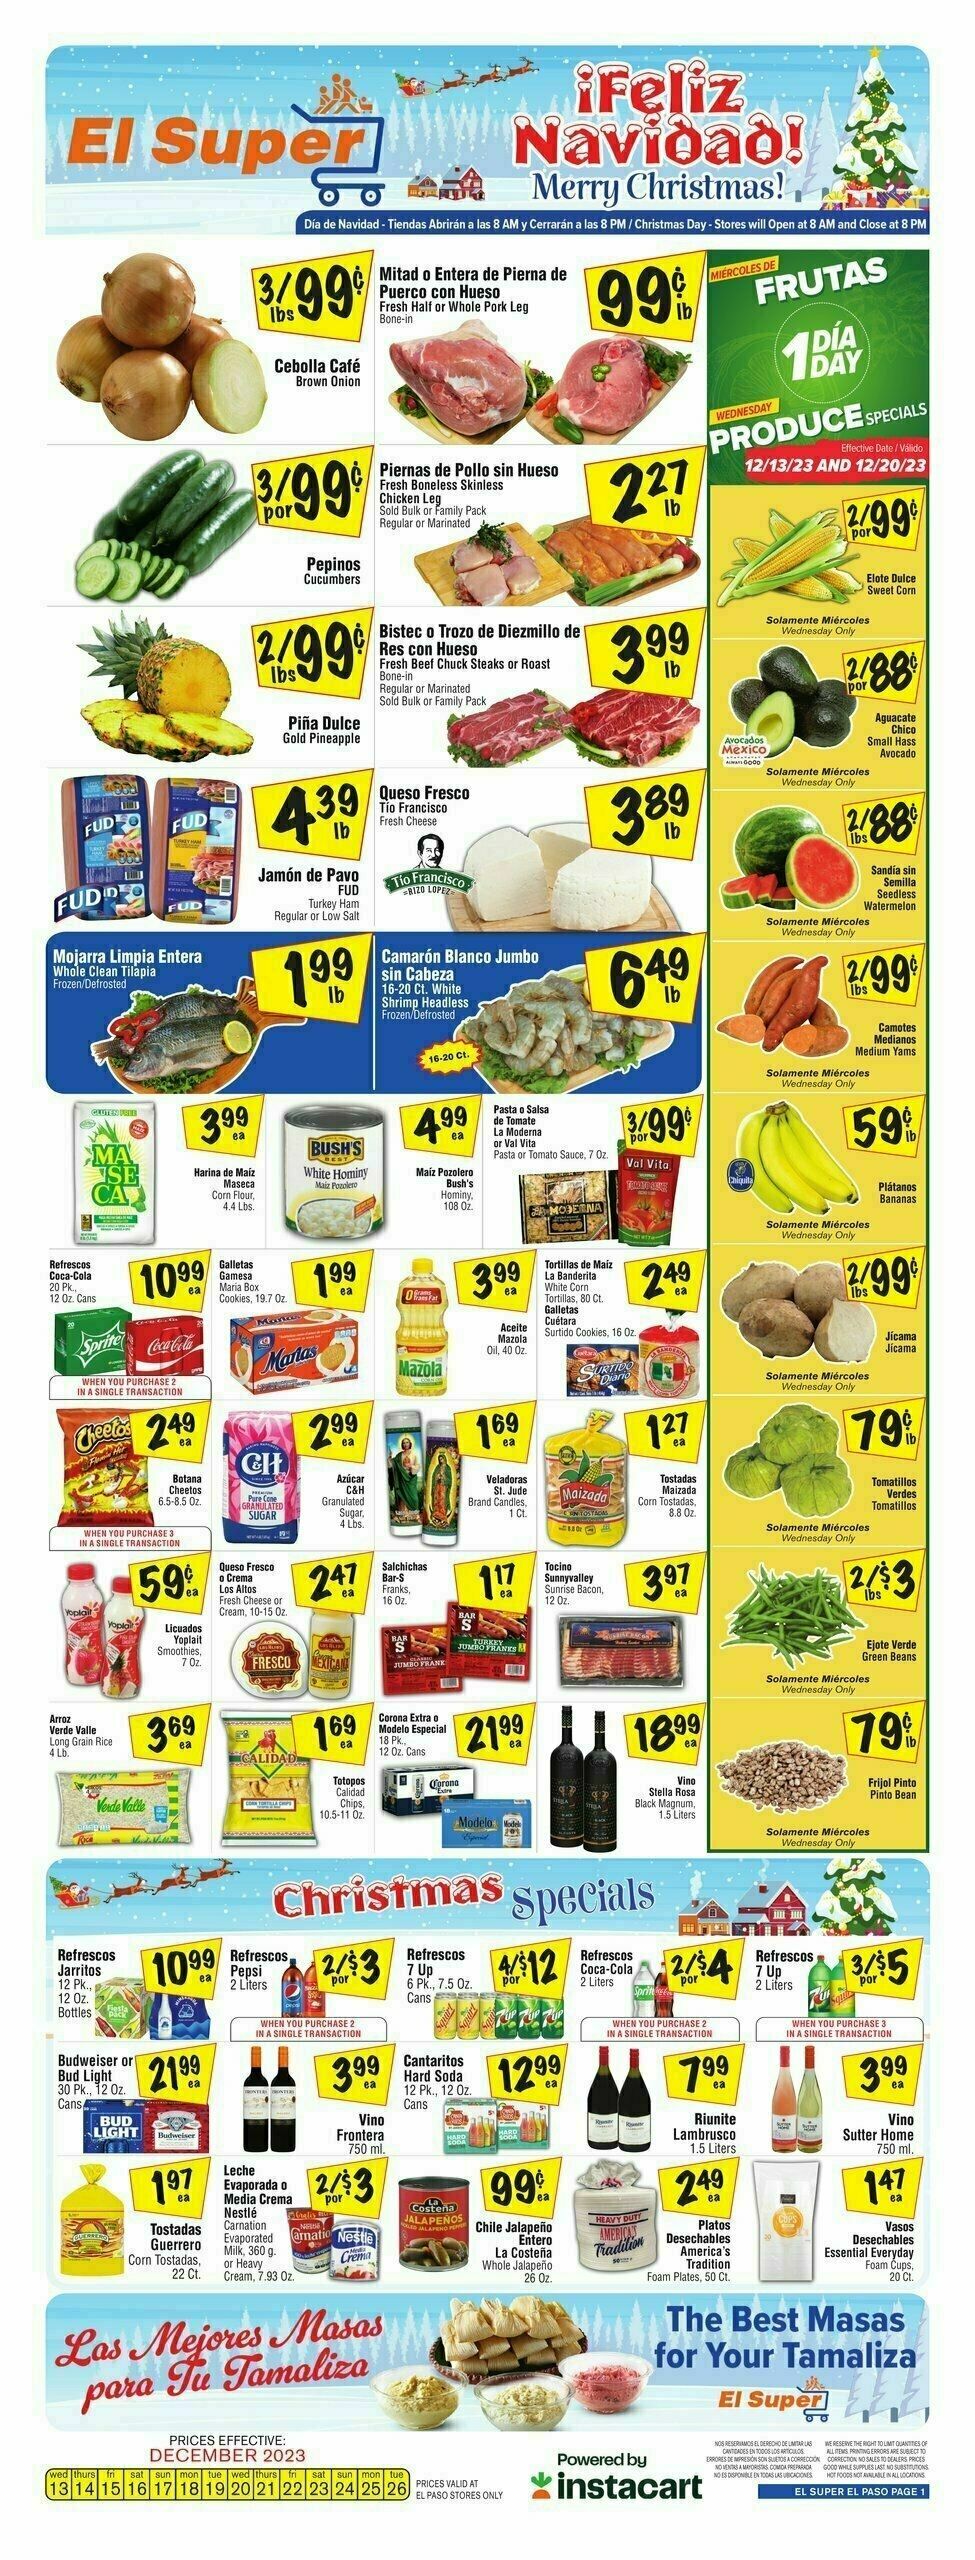 El Super Markets Weekly Ad from December 20